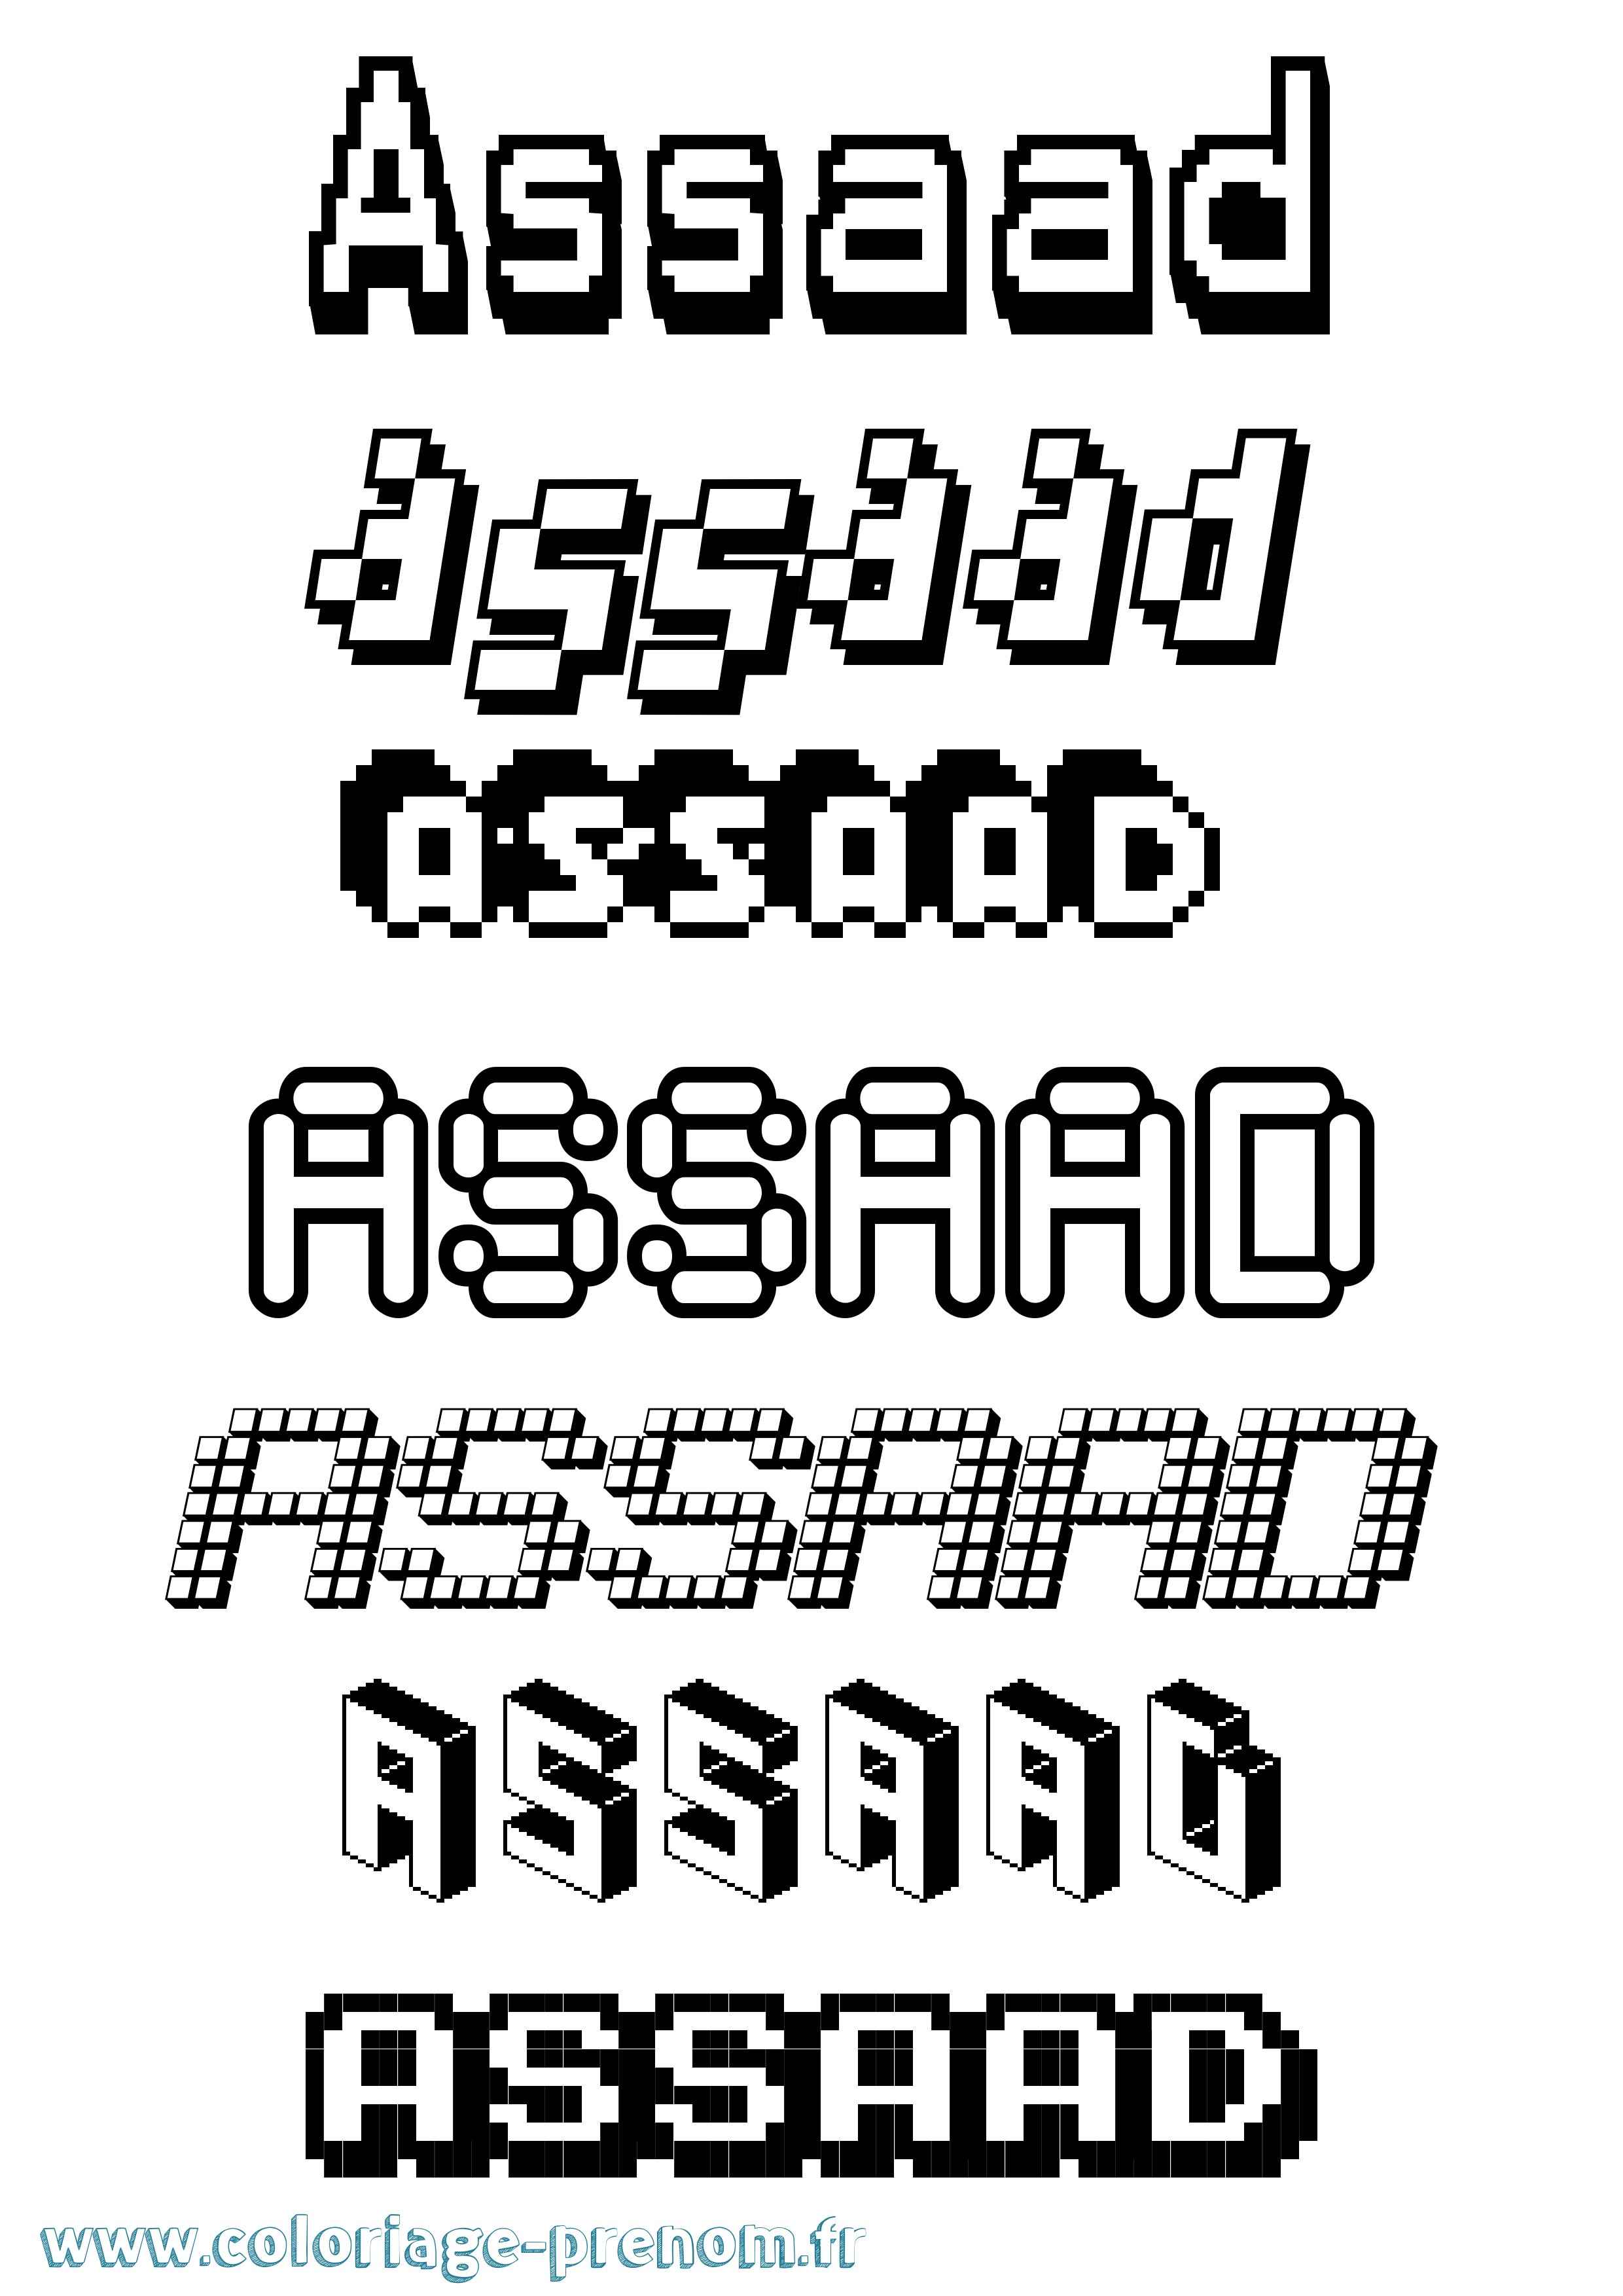 Coloriage prénom Assaad Pixel